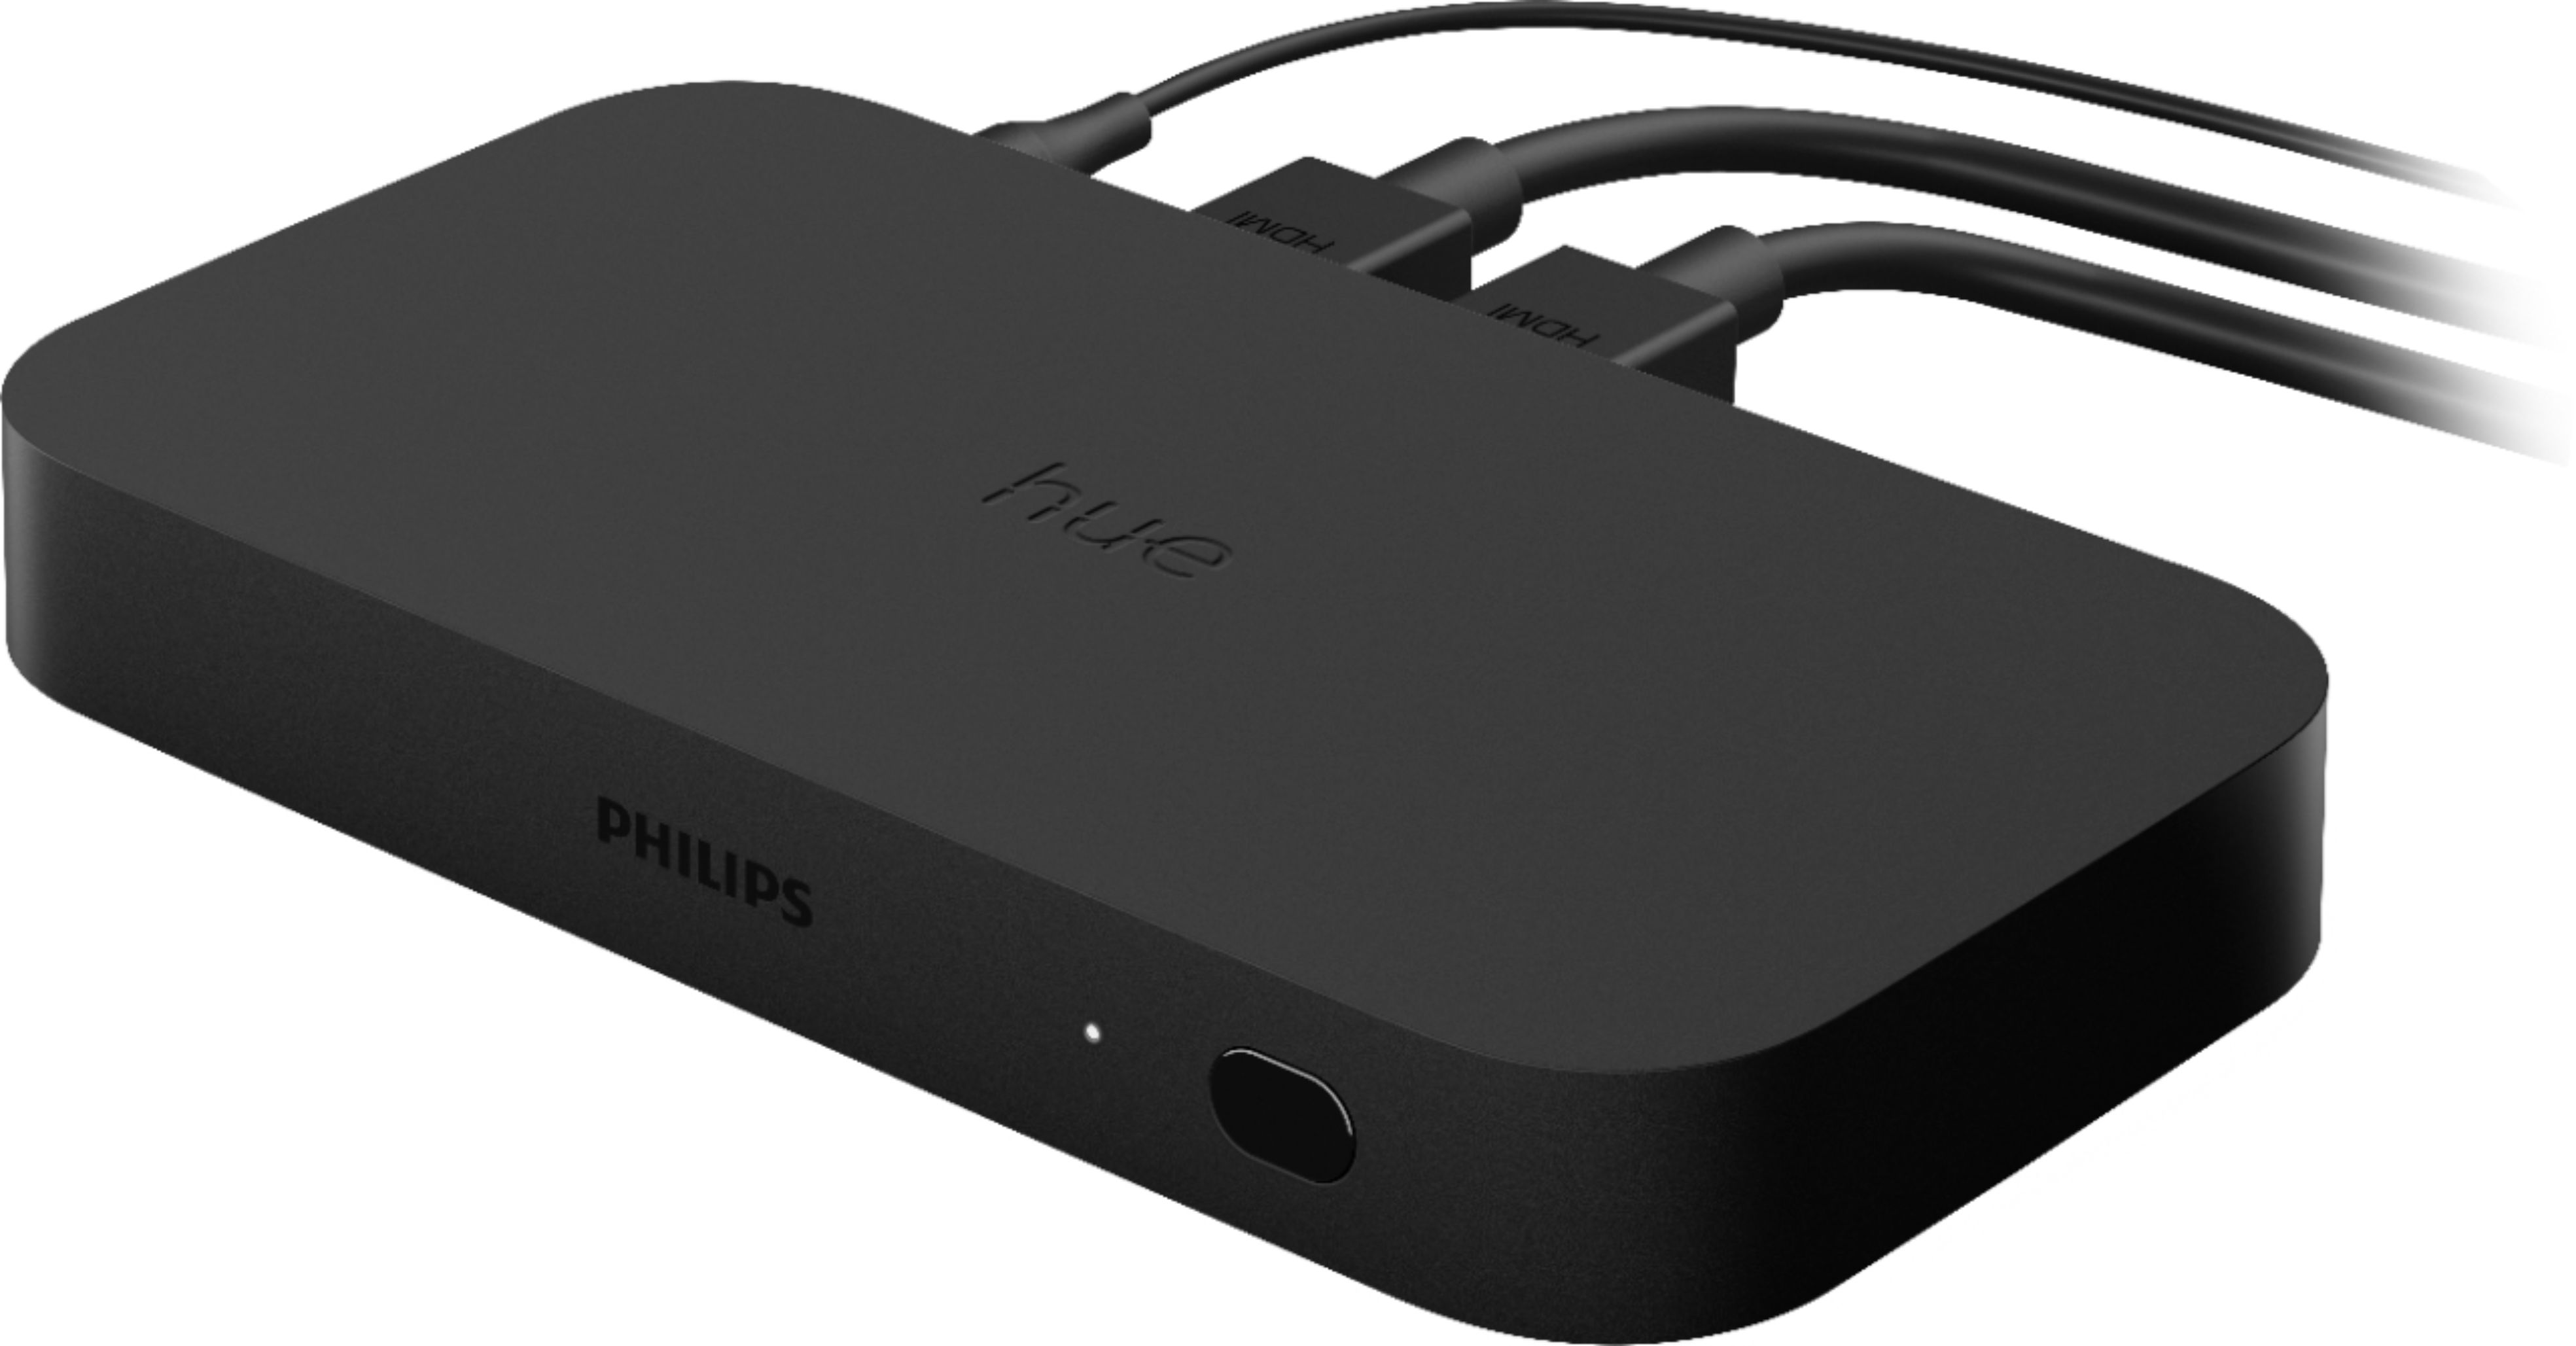 Philips Hue HDMI Sync Box Review